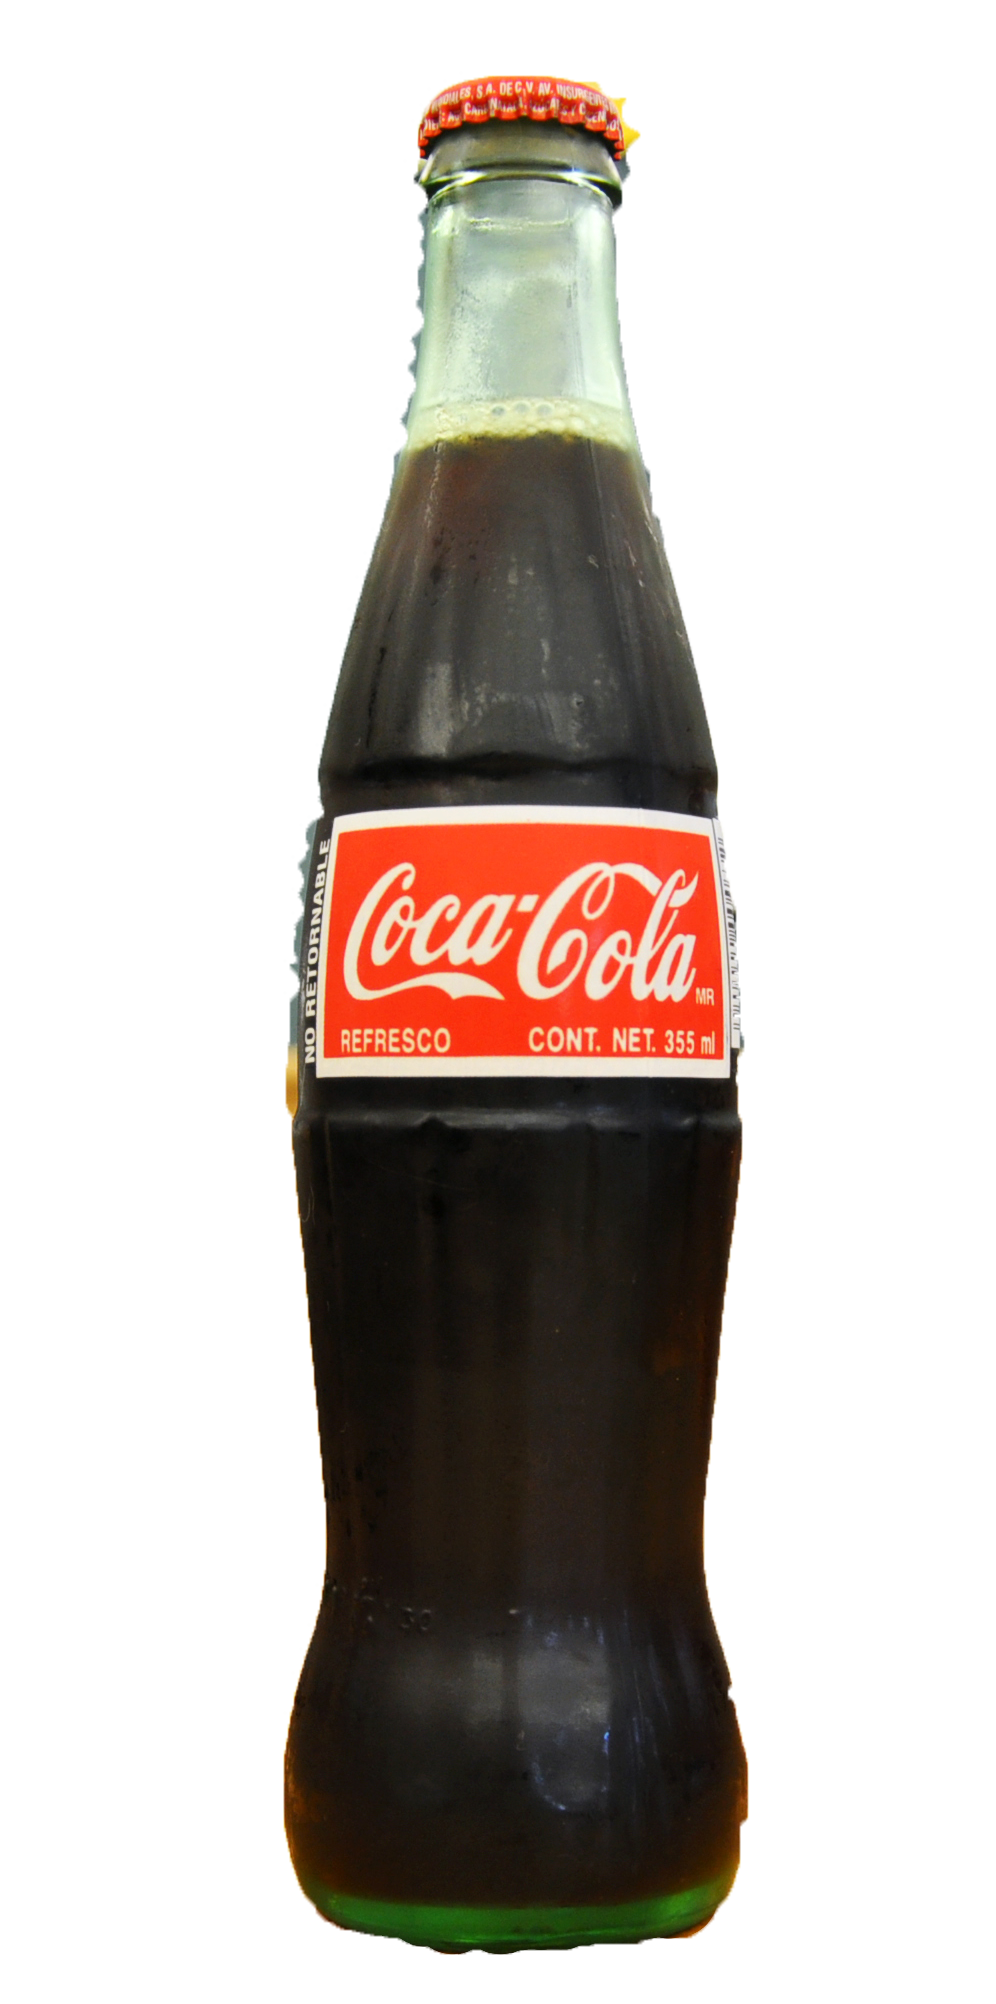 Coca Cola Bottle Png Image - Cola Bottle, Transparent background PNG HD thumbnail